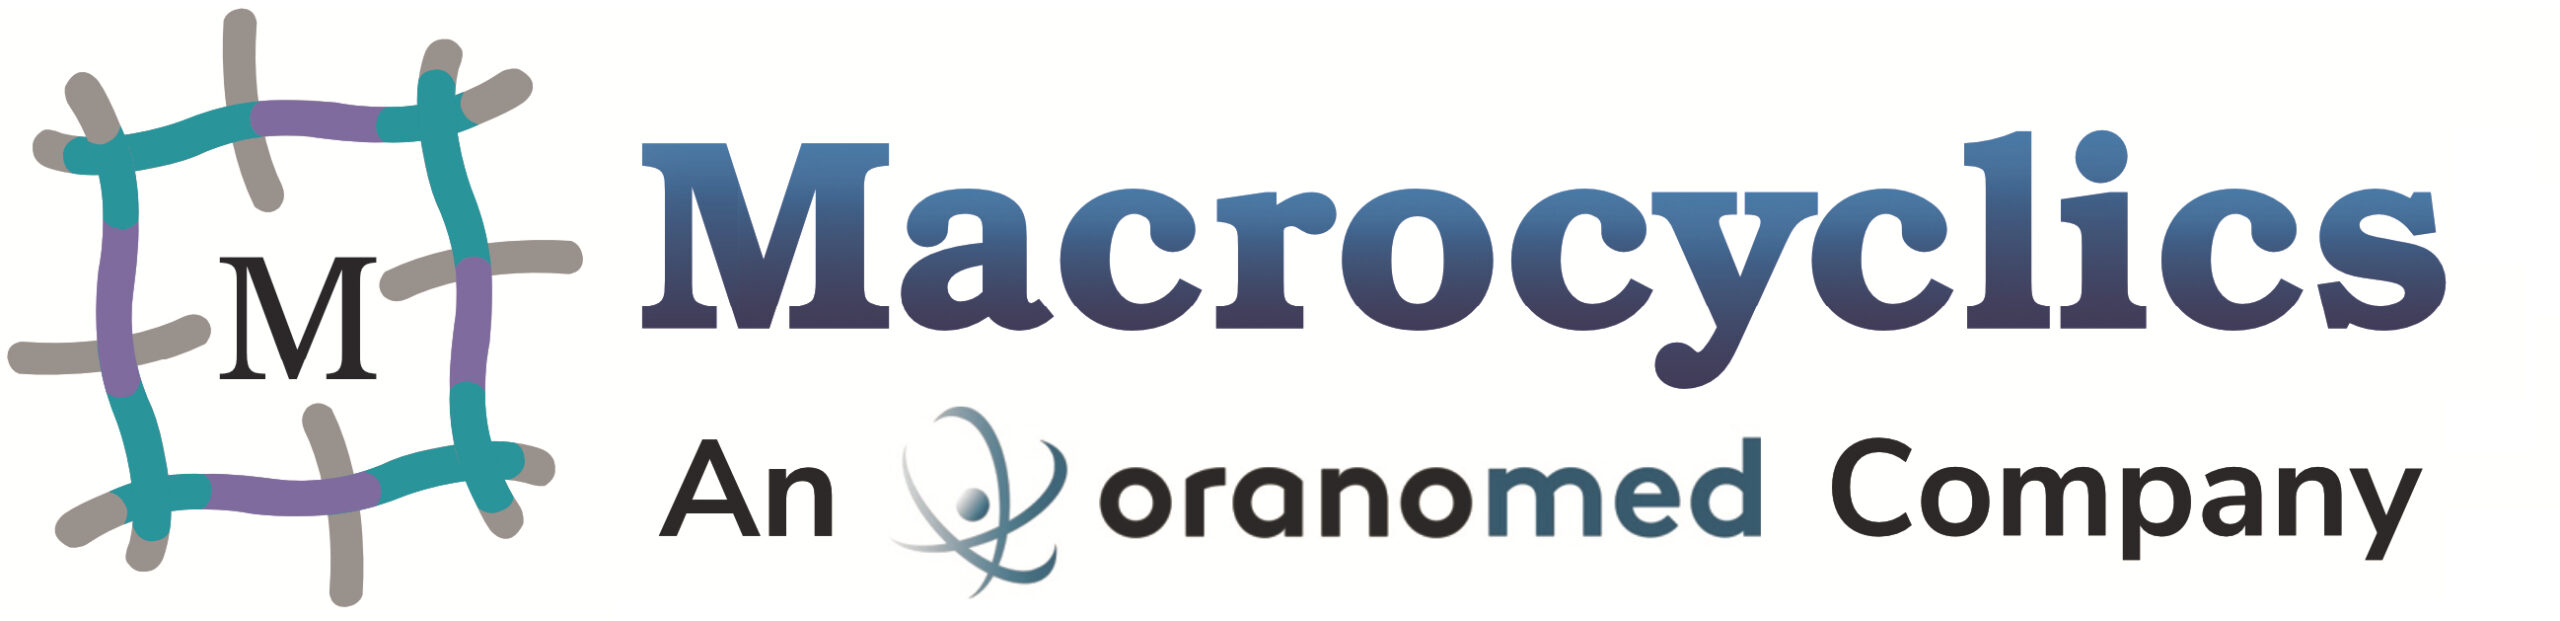 Macrocyclics-Header-with-Orano-Med